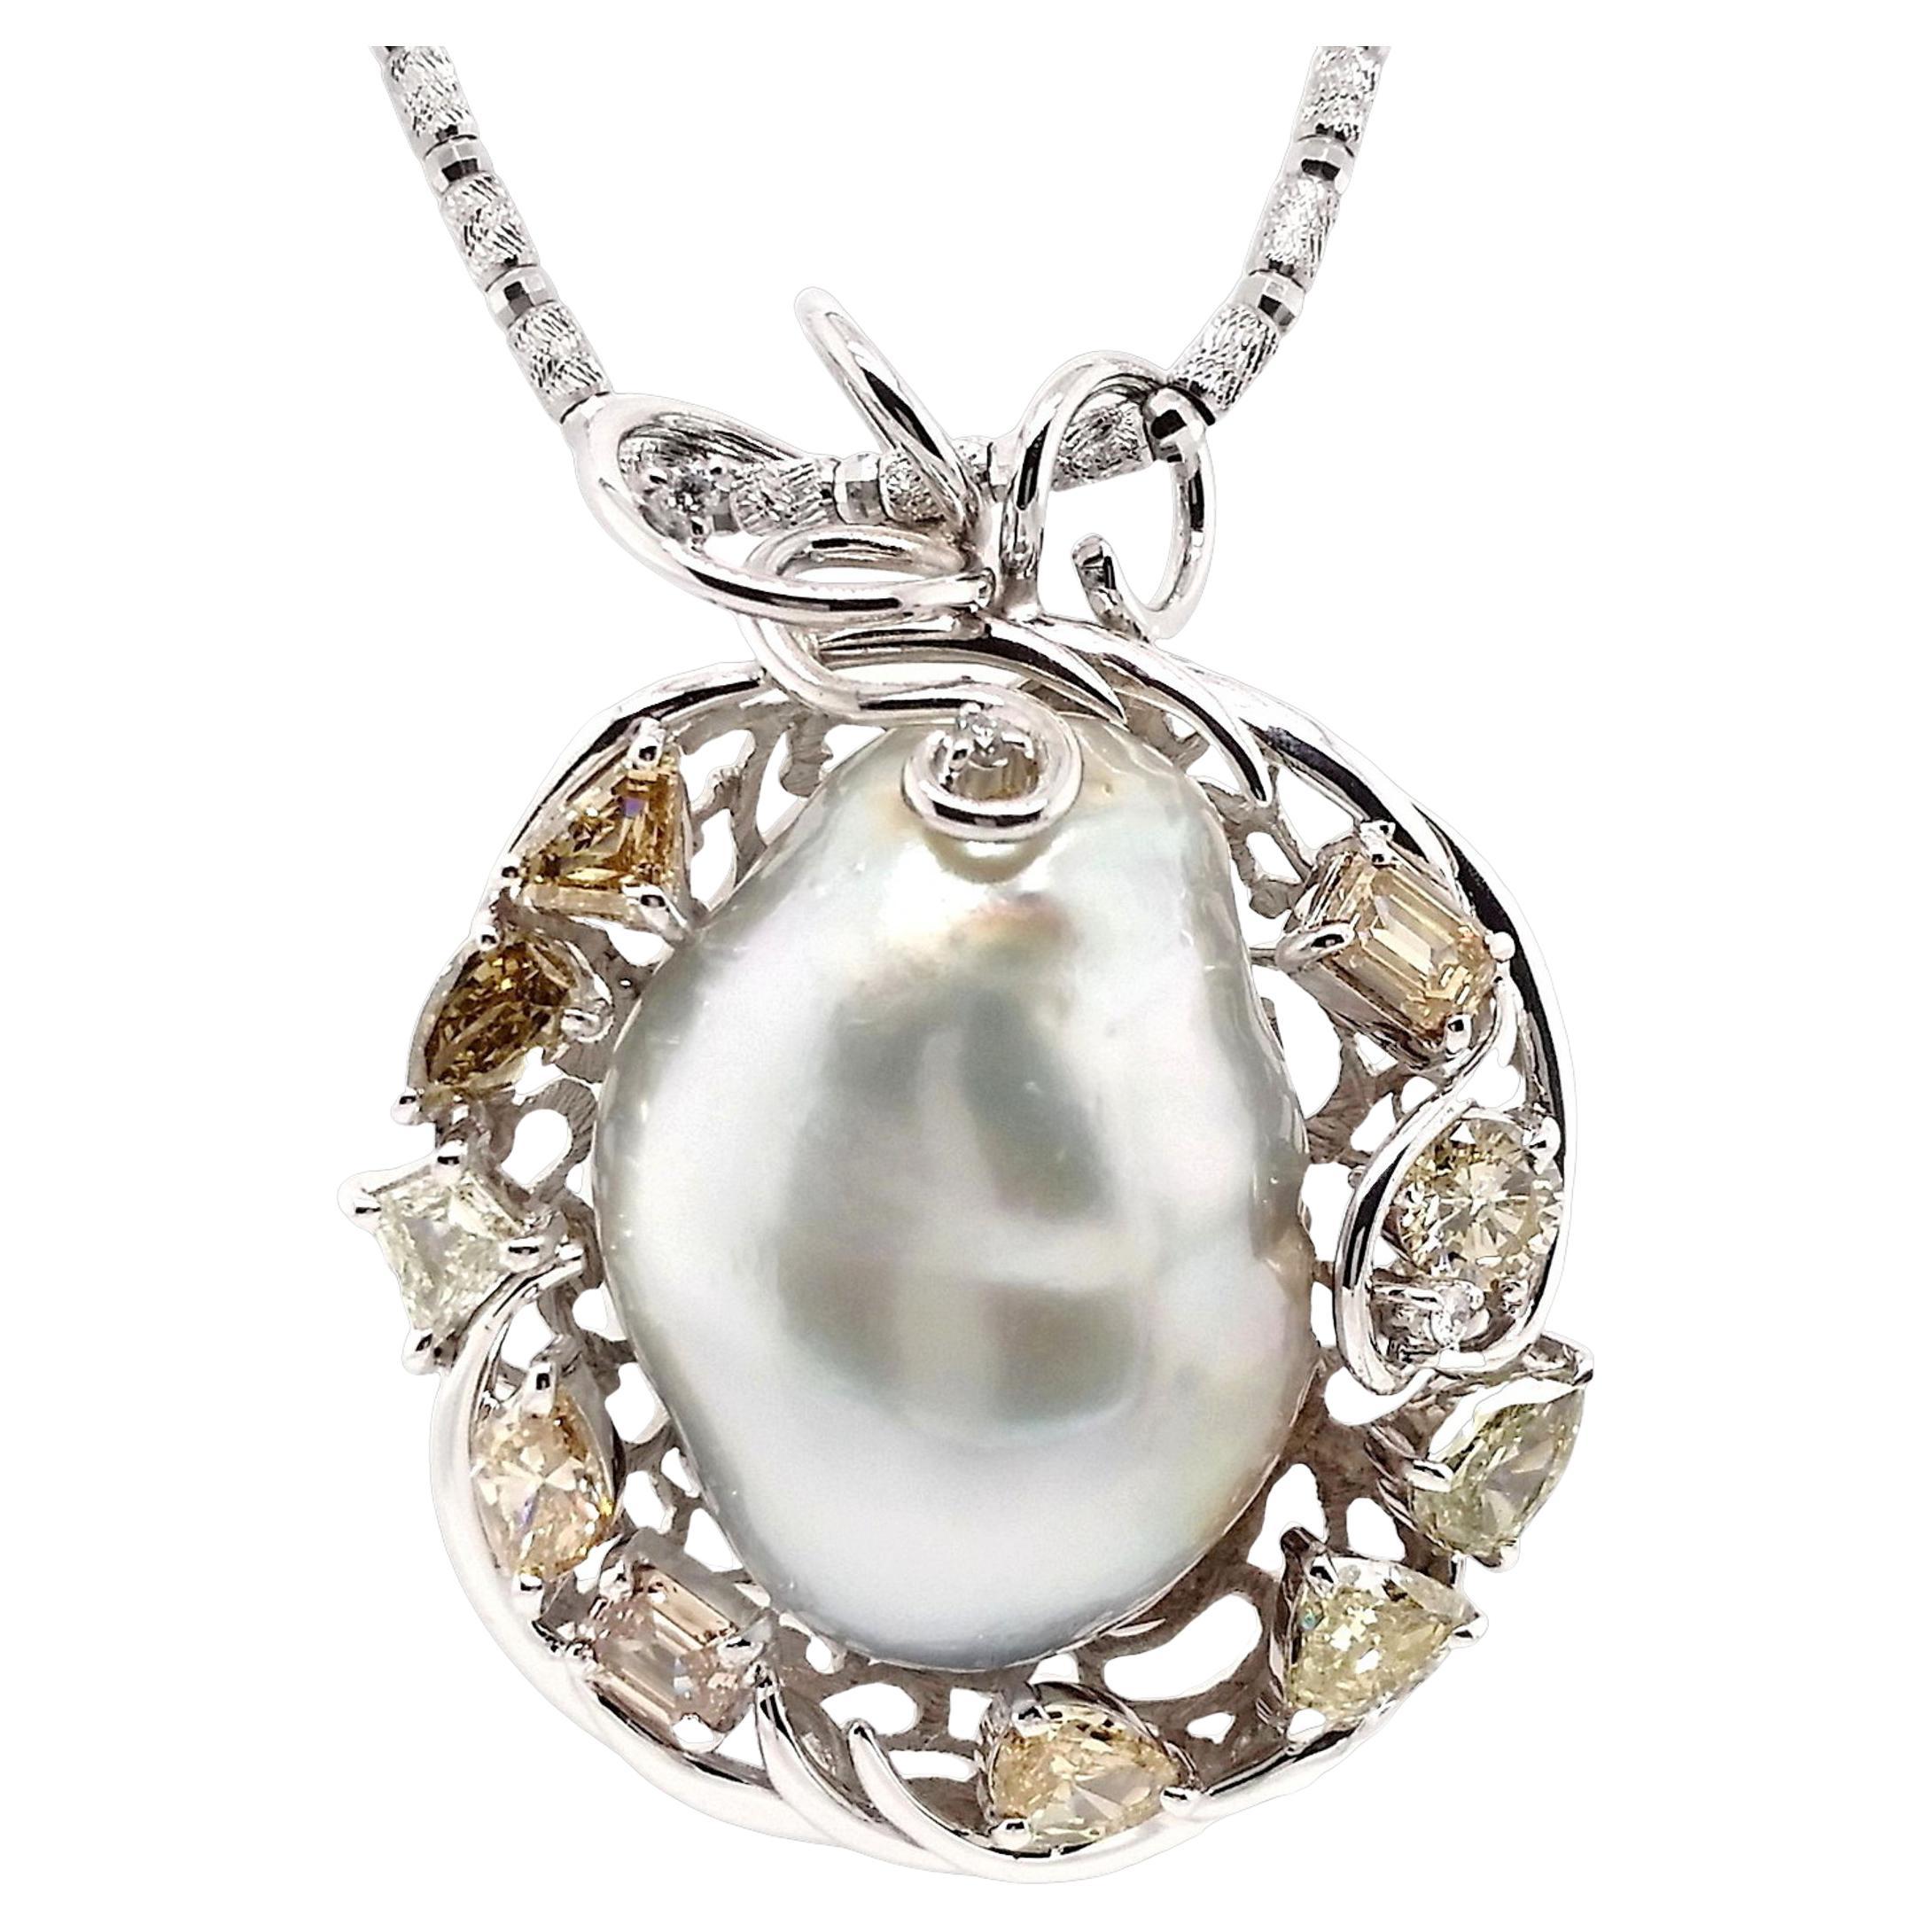 Collier en or blanc 18 carats avec perles de culture certifiées IGI et diamants naturels de 3,21 carats